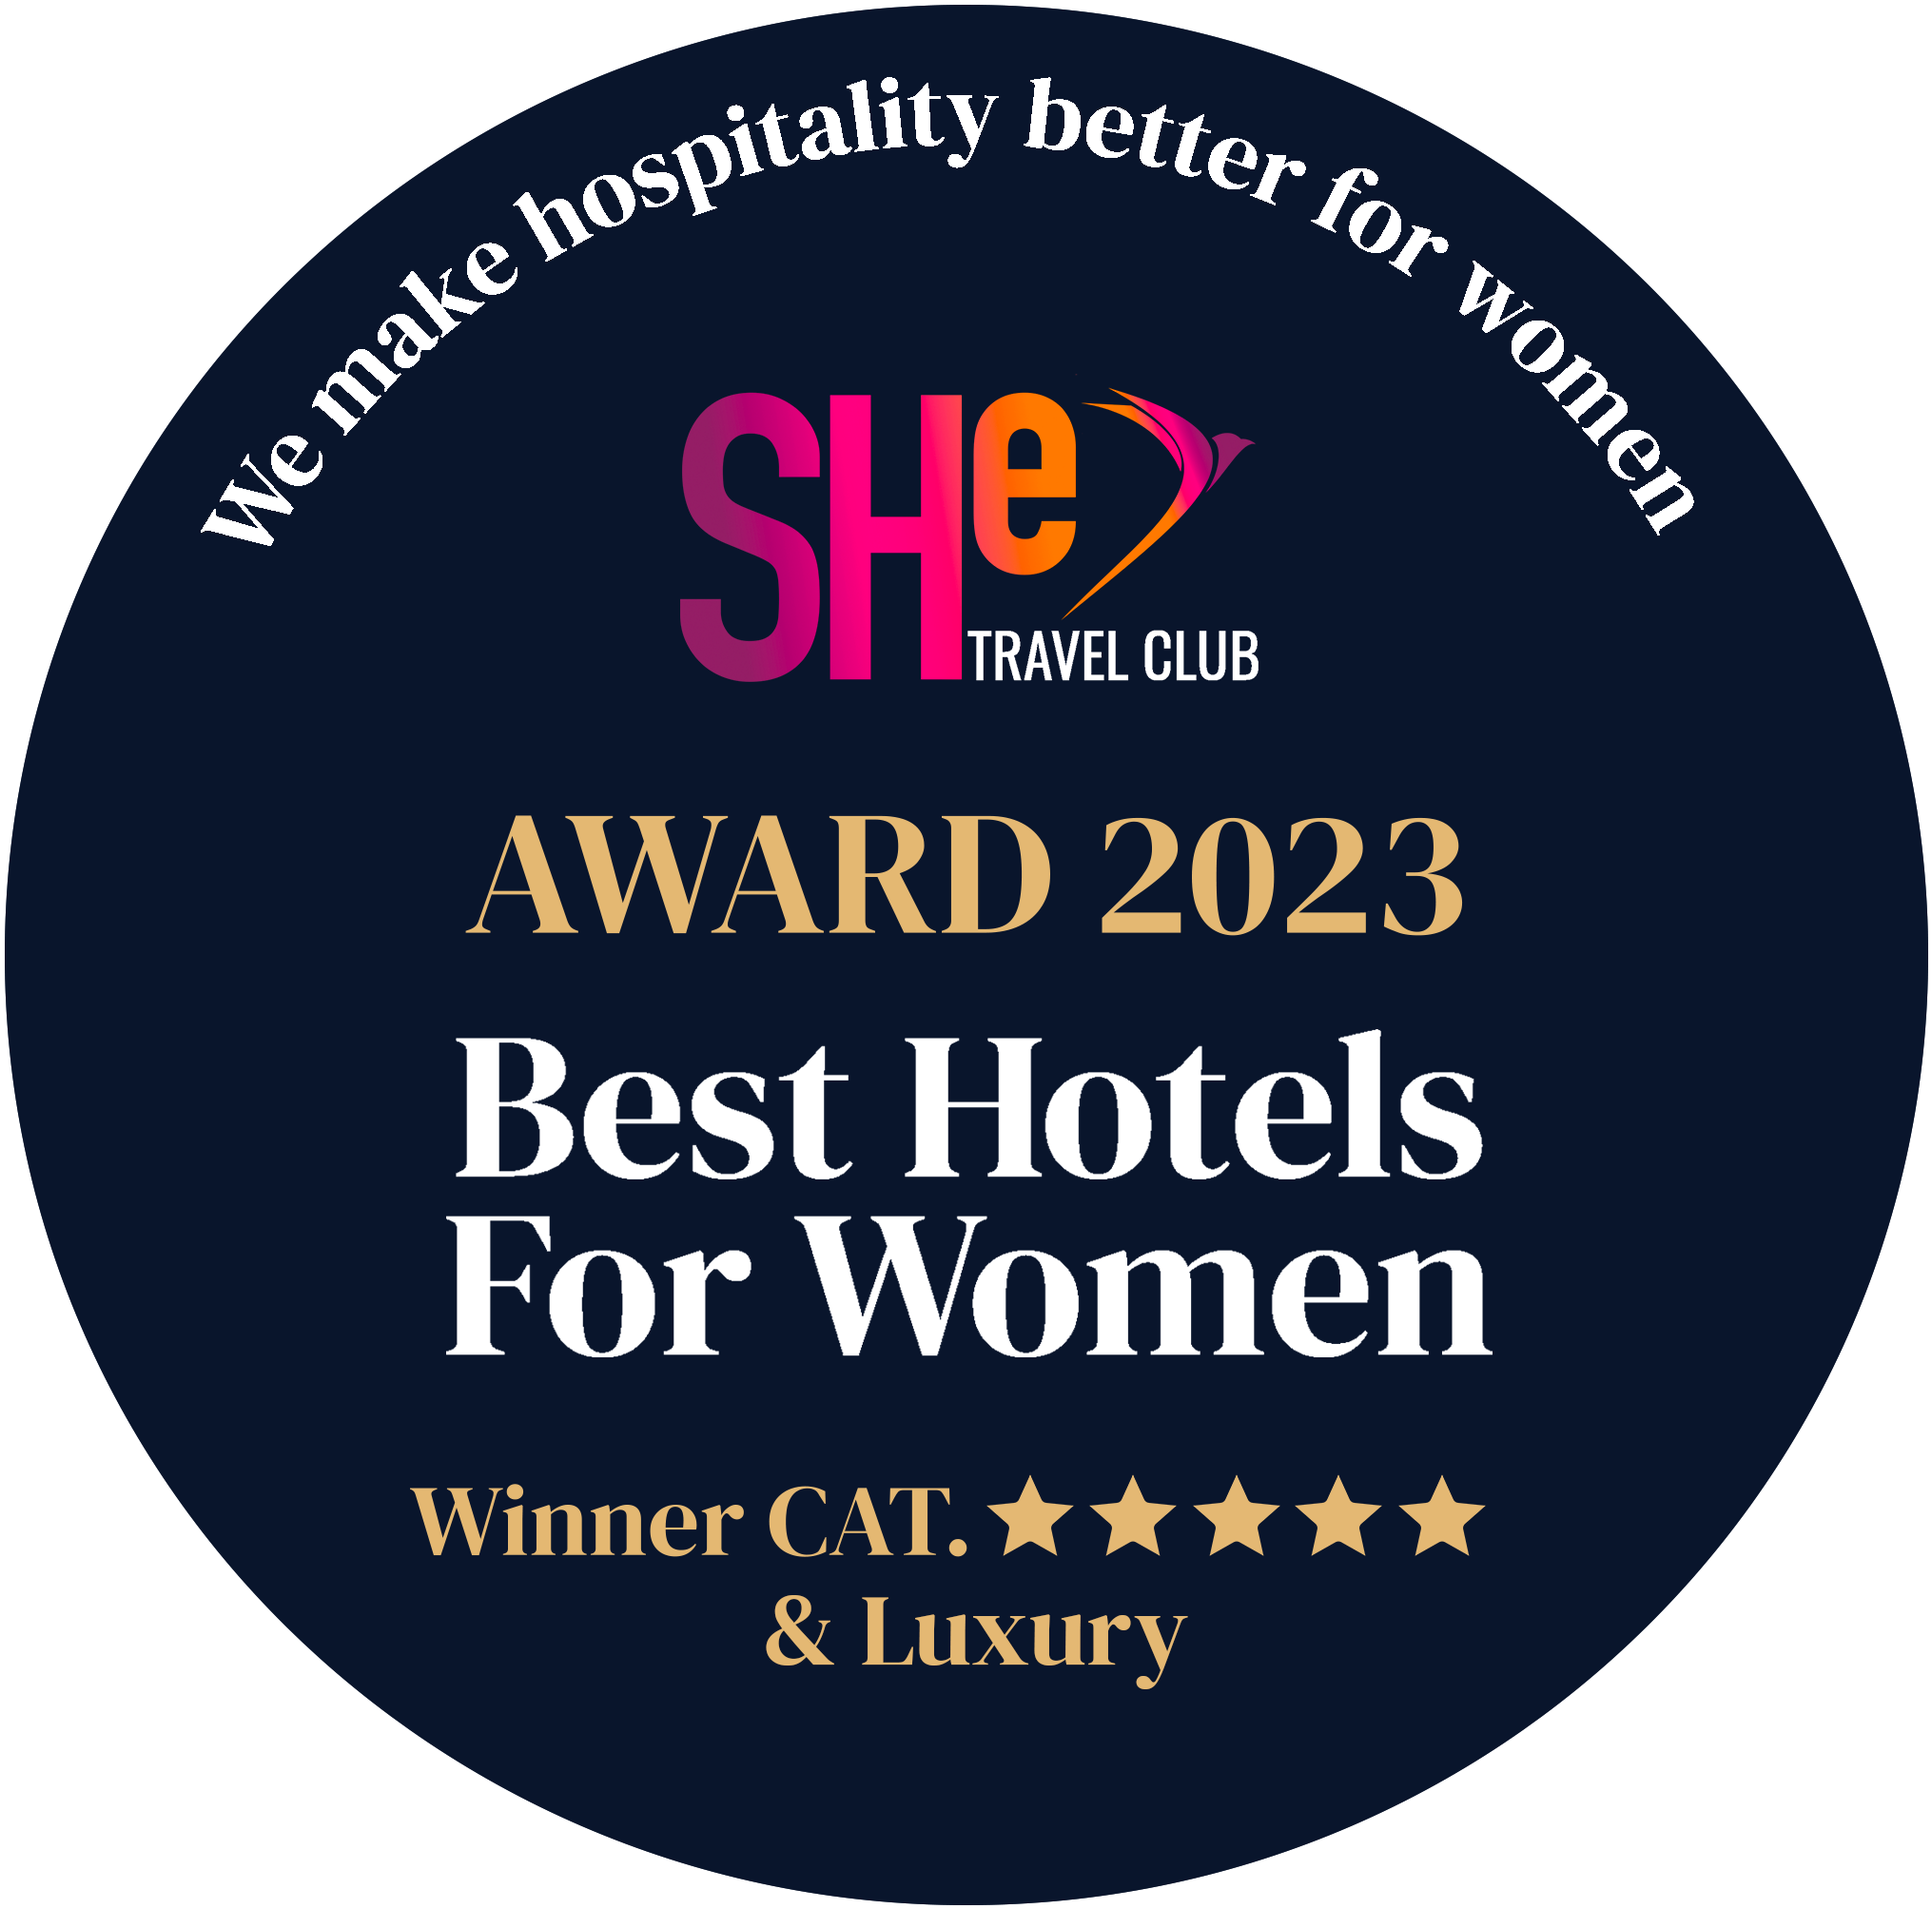 She Travel Club - Award 2023 Winner category Luxury